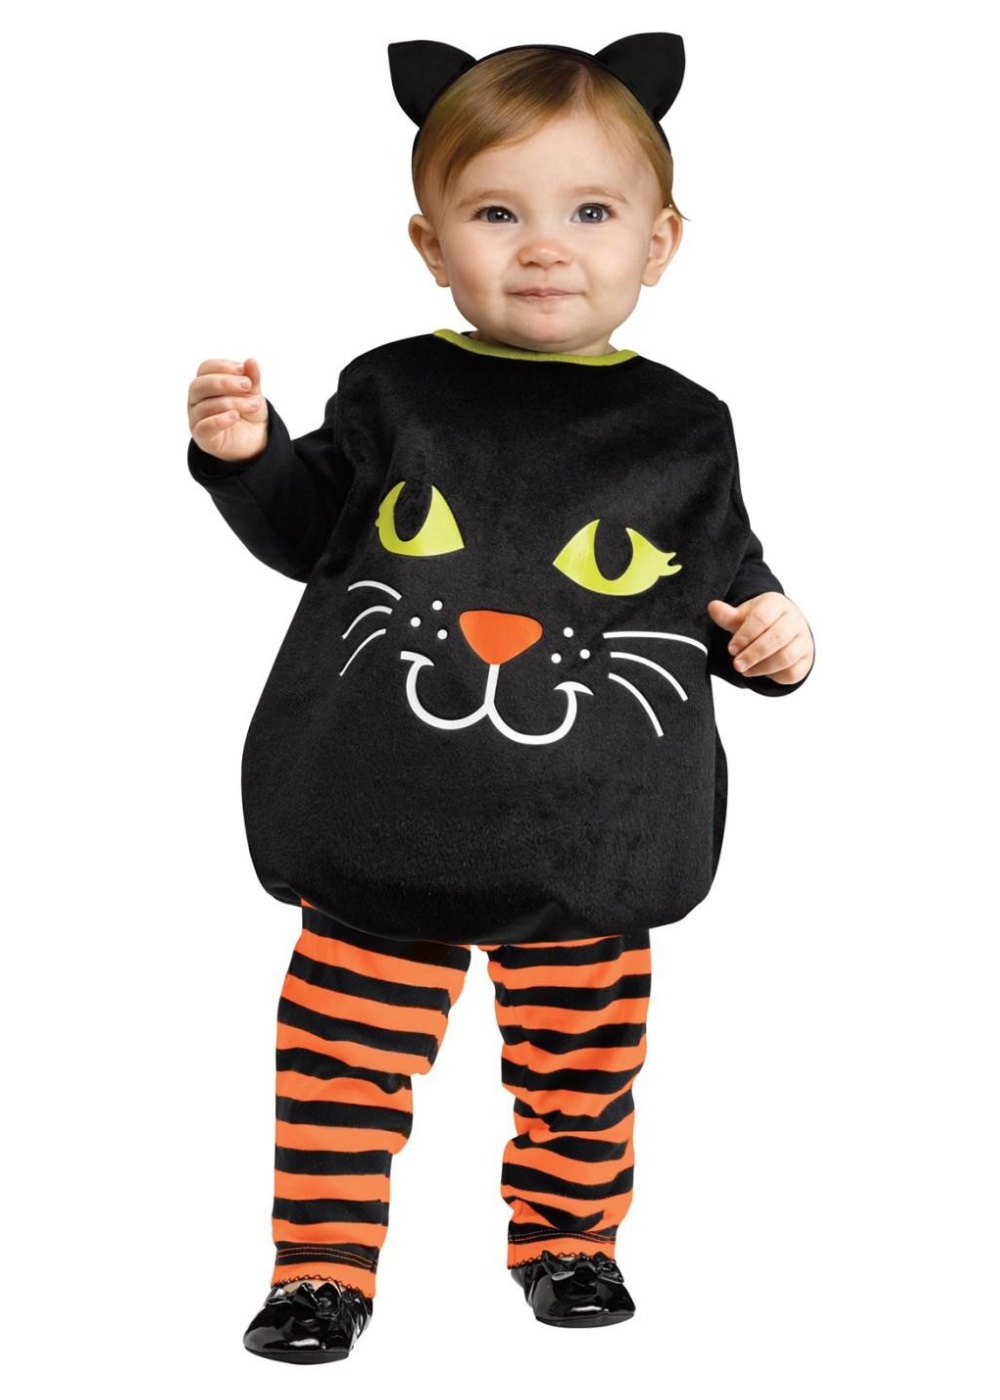 Itty Bitty Kitty Baby Costume